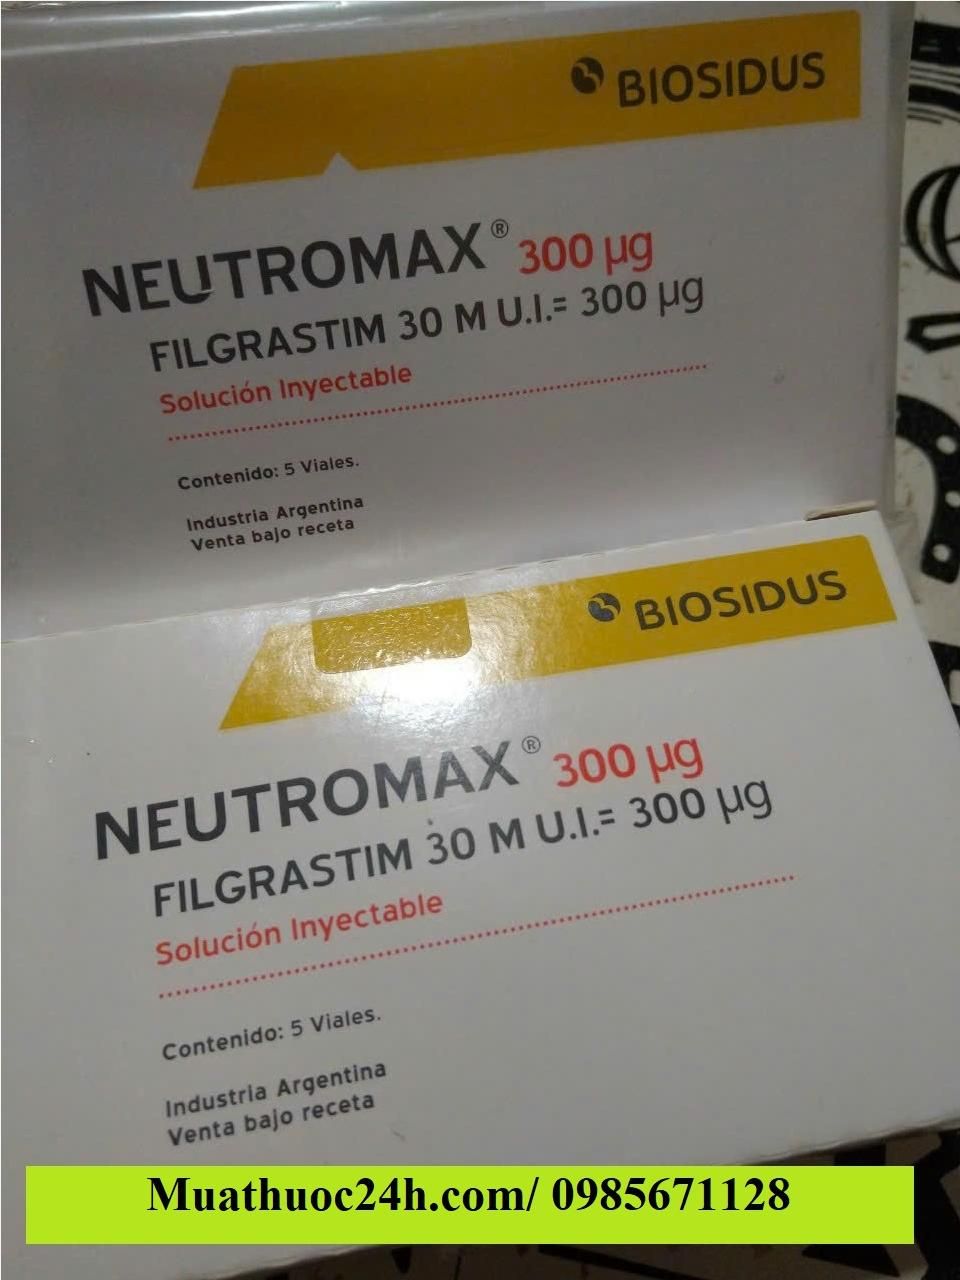 Thuốc Neutromax 300mcg Filgrastim giá bao nhiêu mua ở đâu